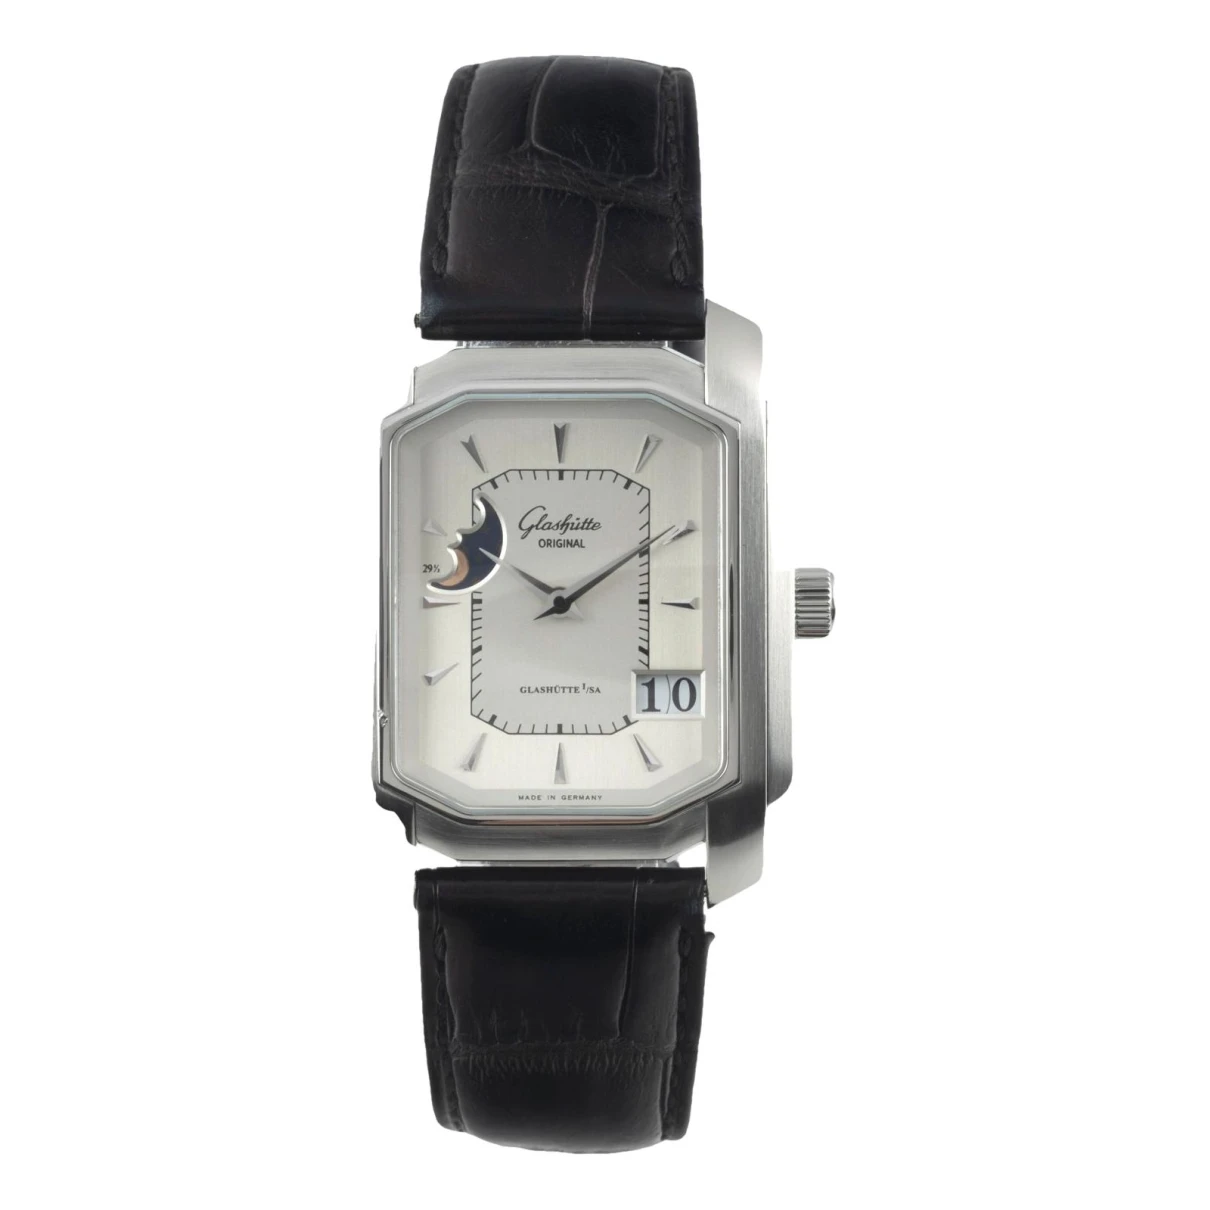 Pre-owned Glashütte Original Watch In Silver